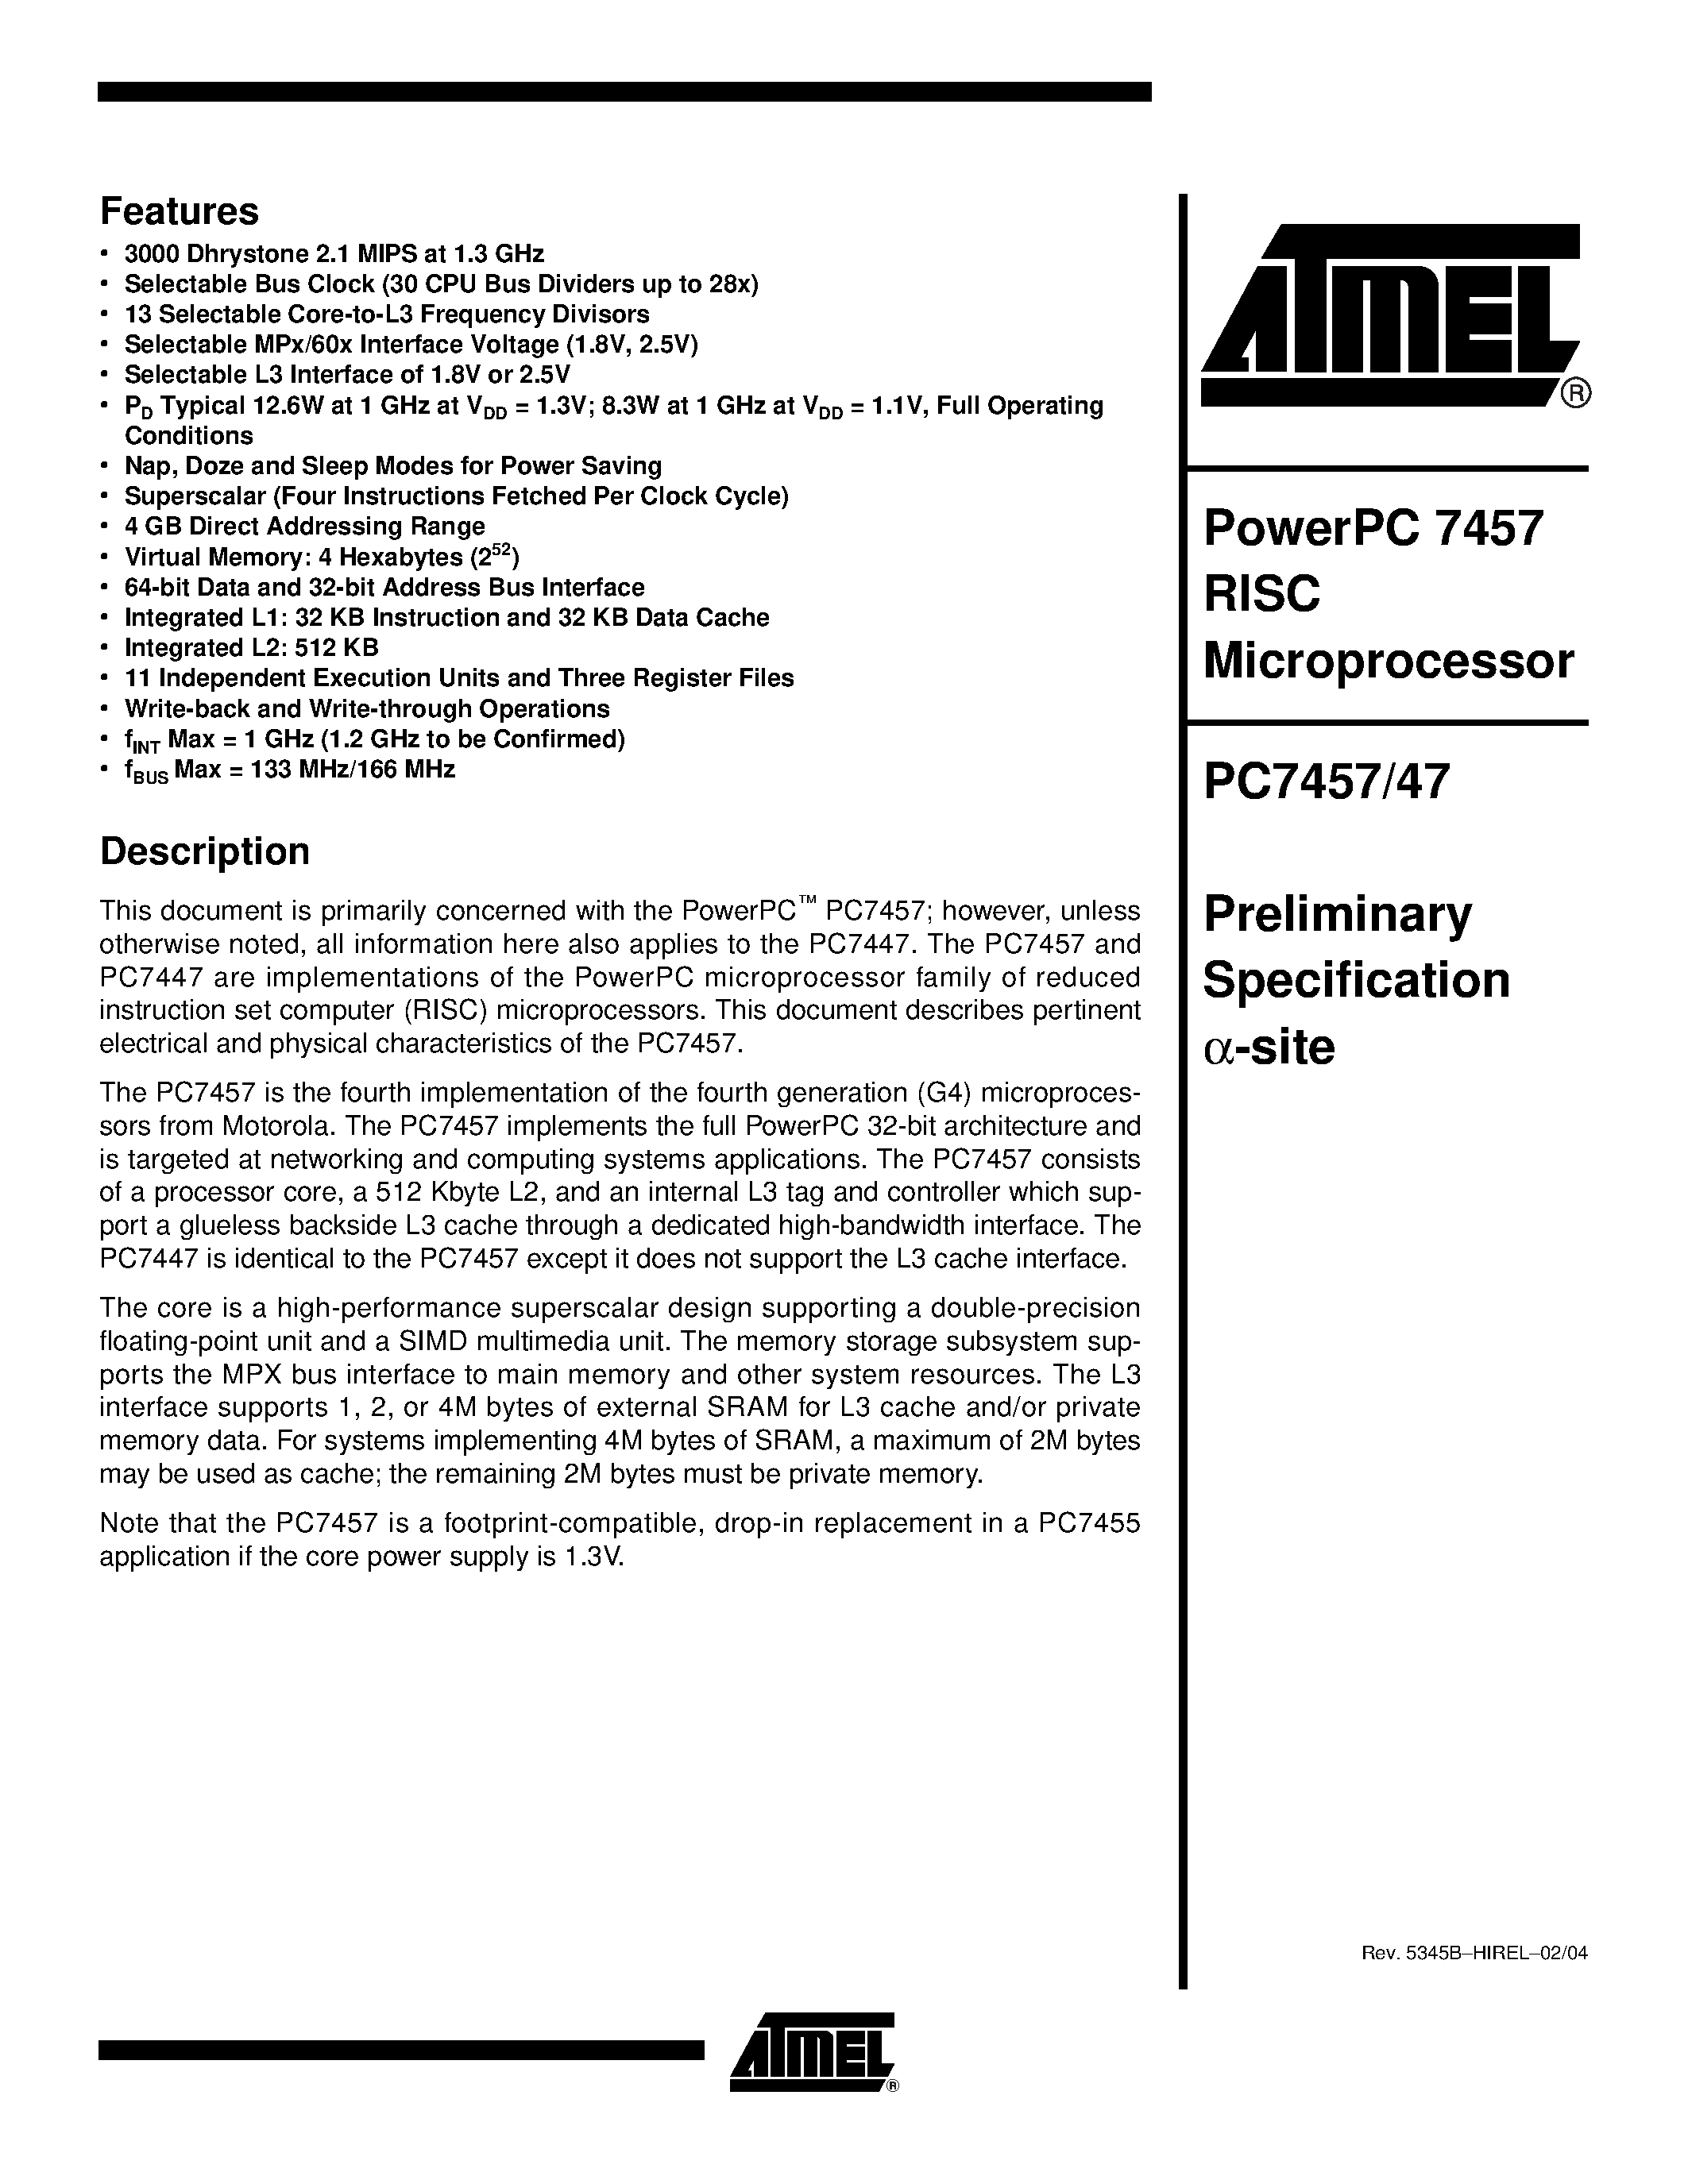 Datasheet PC7447 - (PC7447 / PC7457) PowerPC 7457 RISC Microprocessor page 1